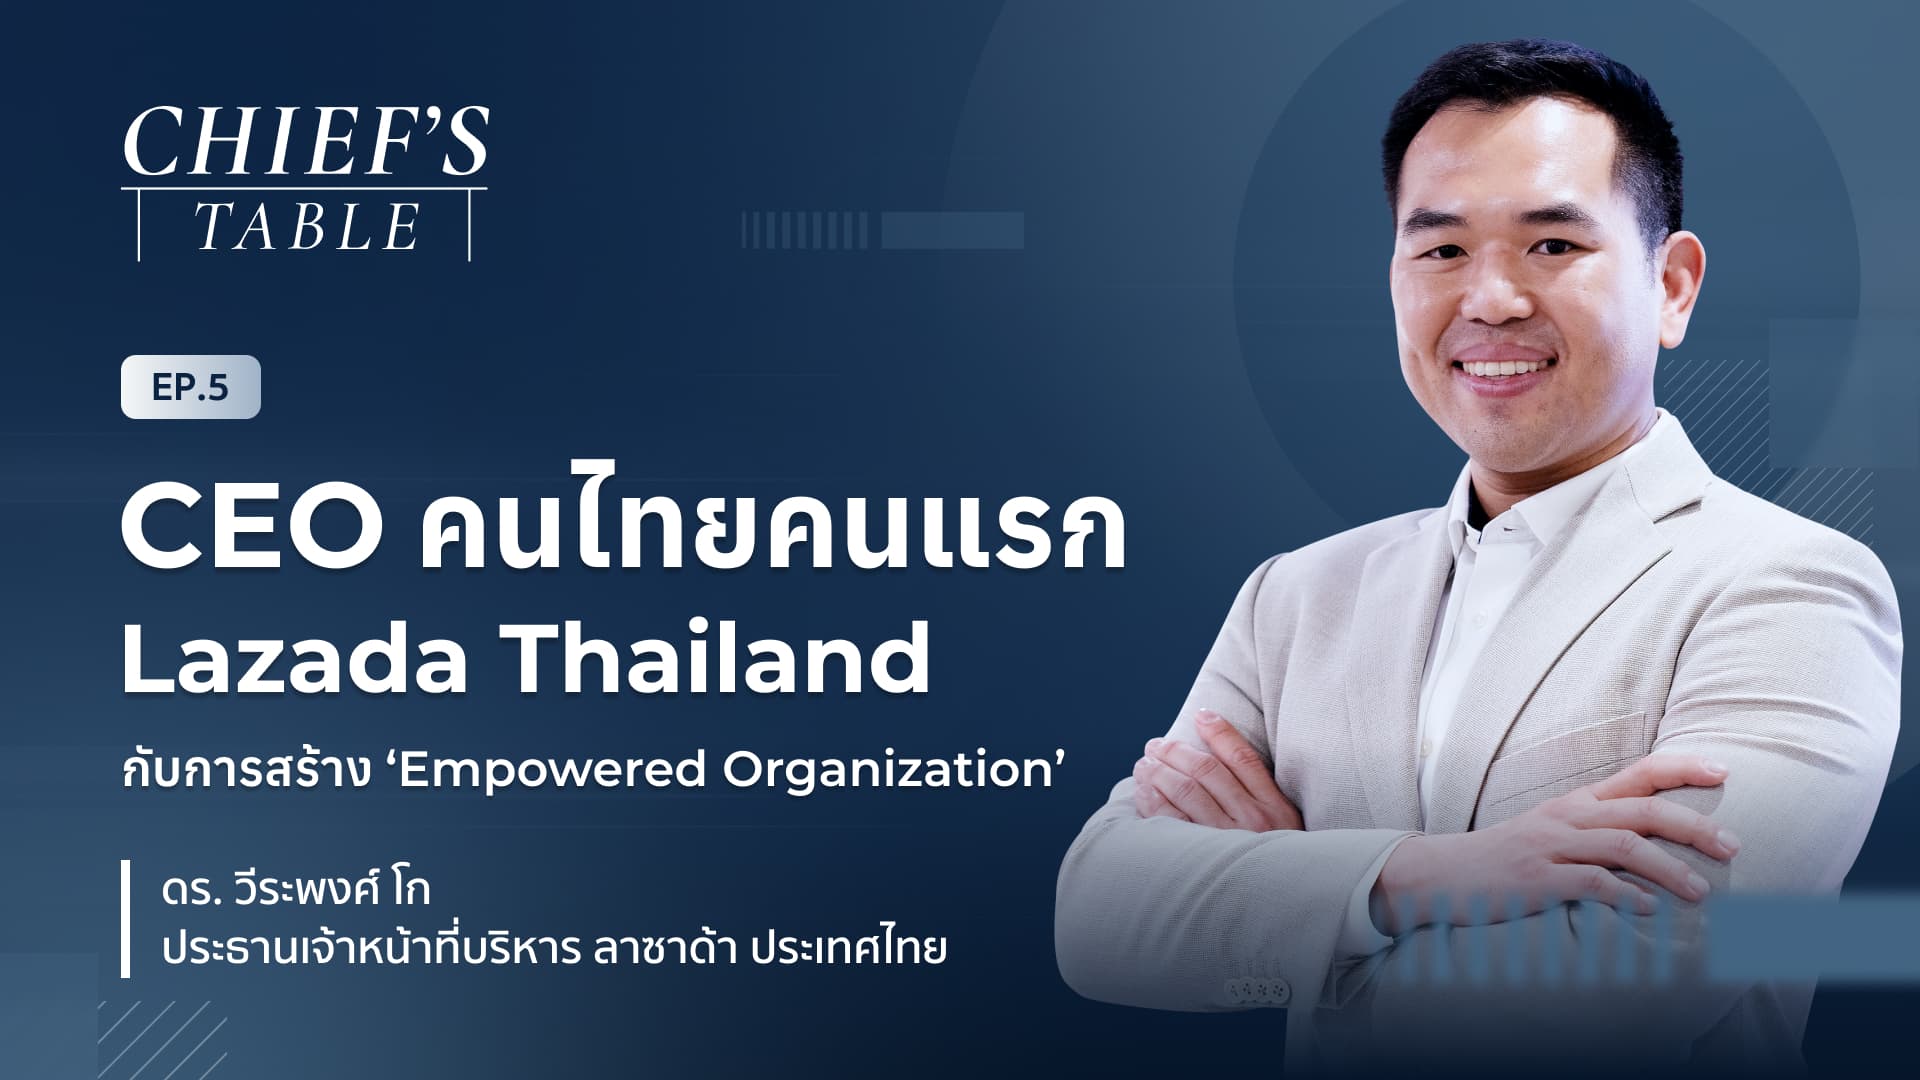 EP.05 CEO แห่ง Lazada Thailand
กับการสร้าง ‘Empowered Organization’